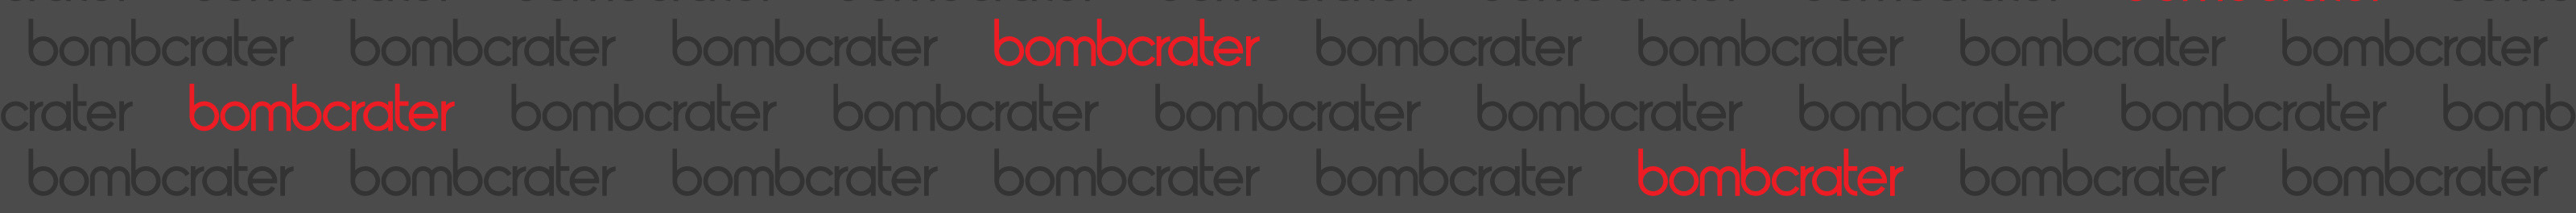 Bombcrater Design's profile banner